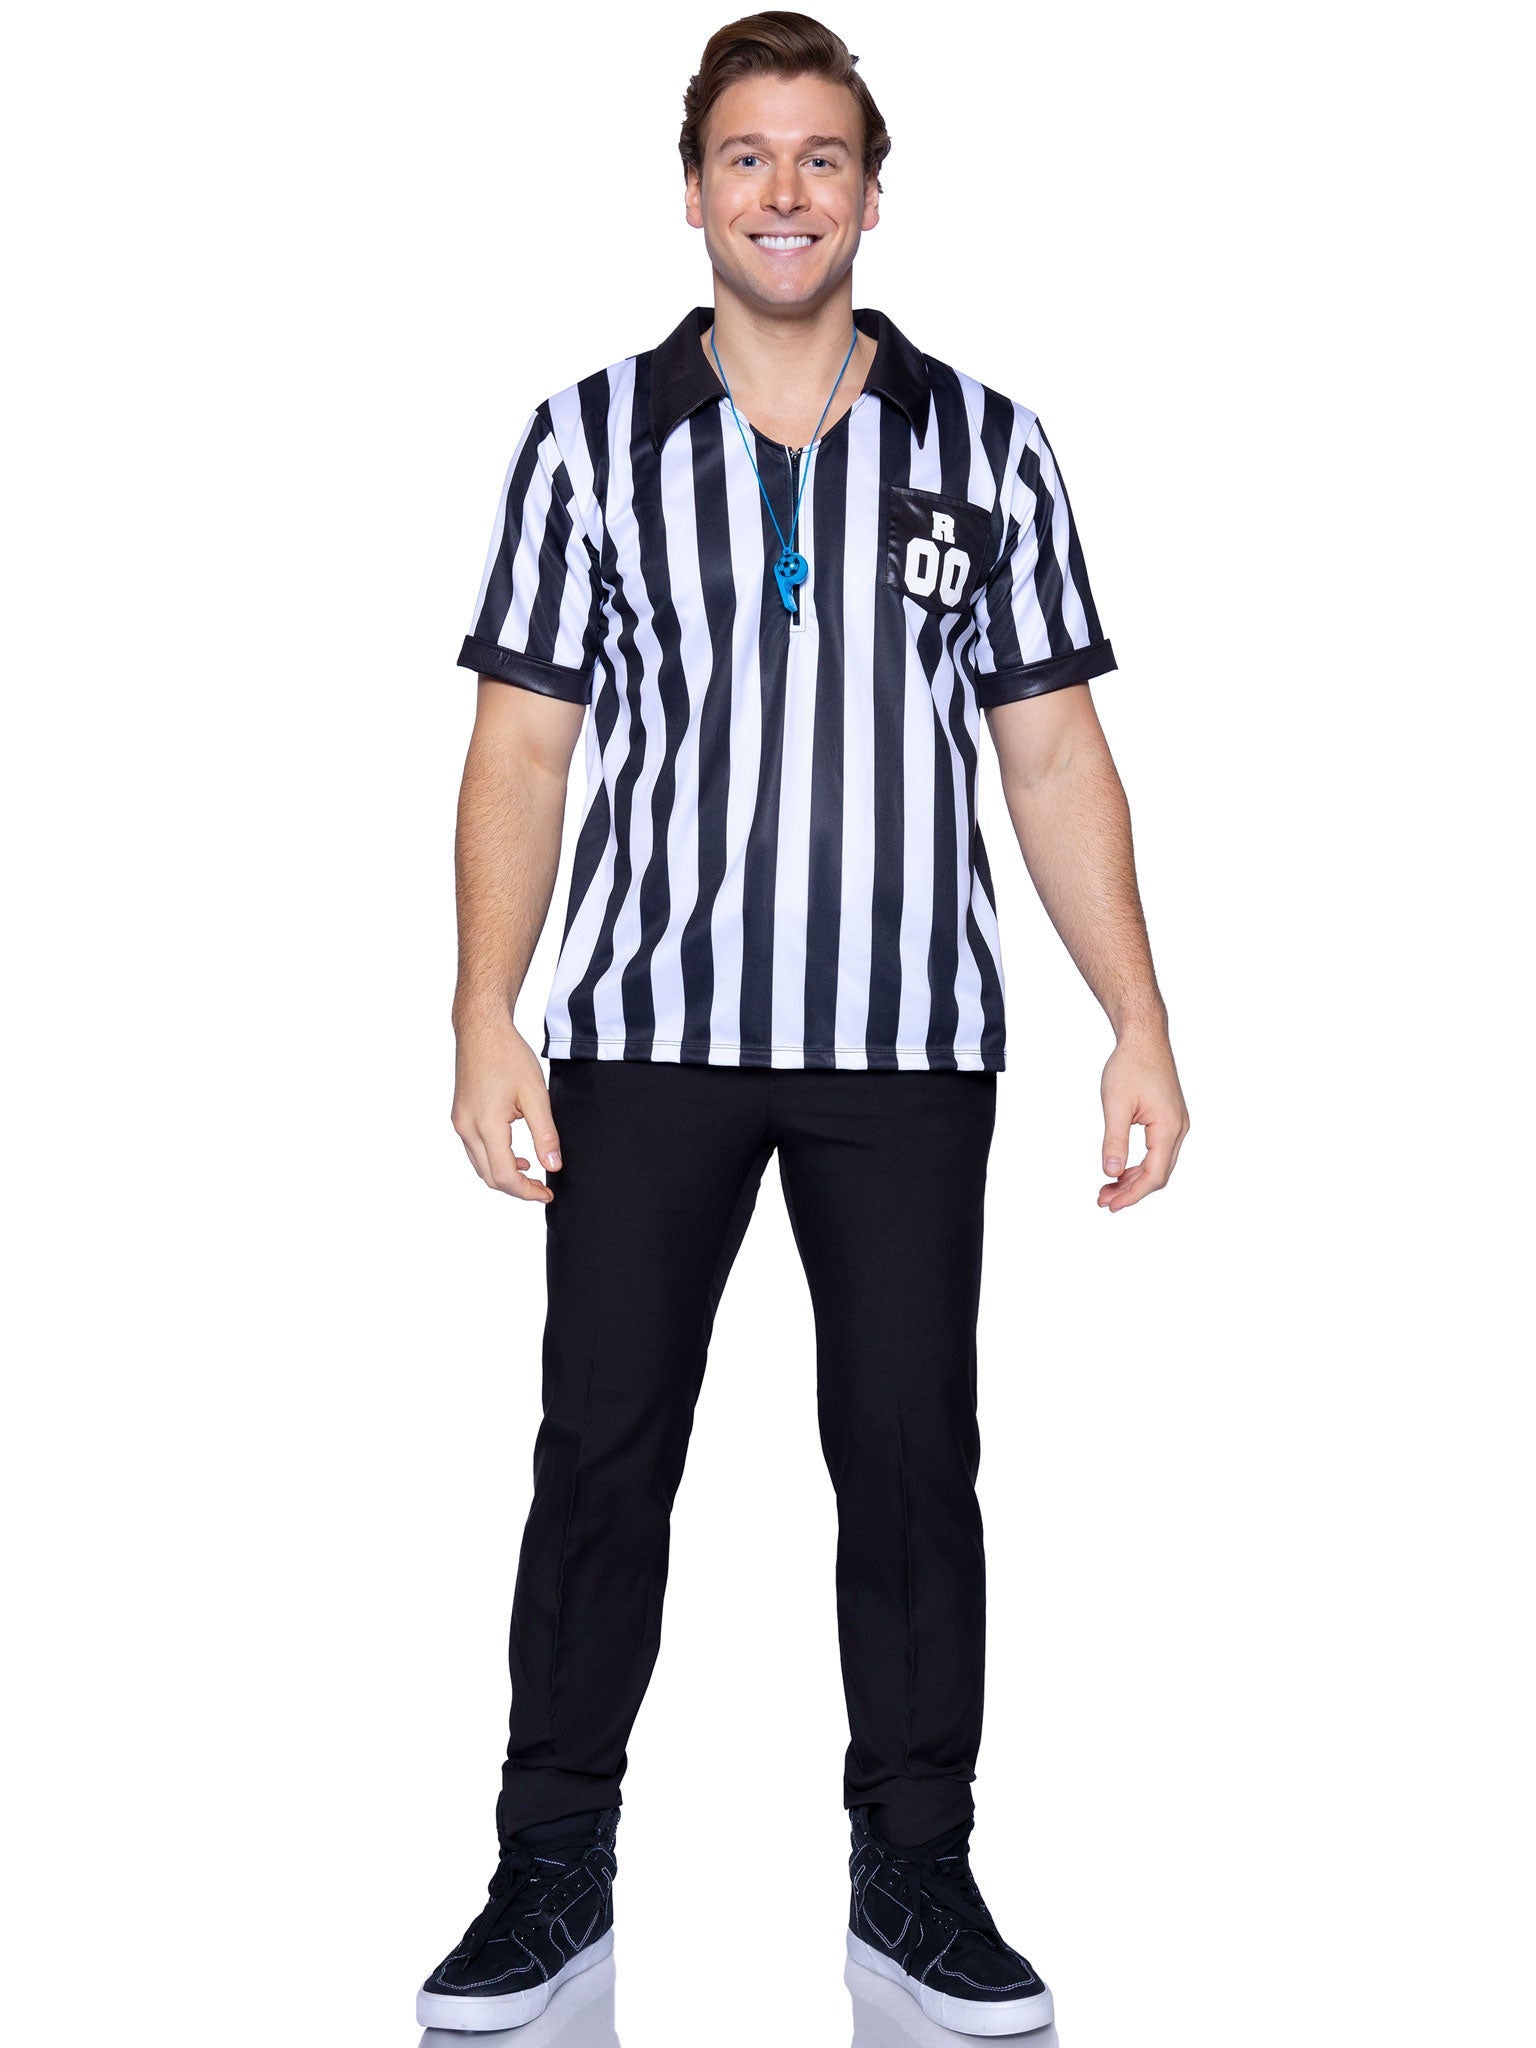 Men'S Referee Shirts